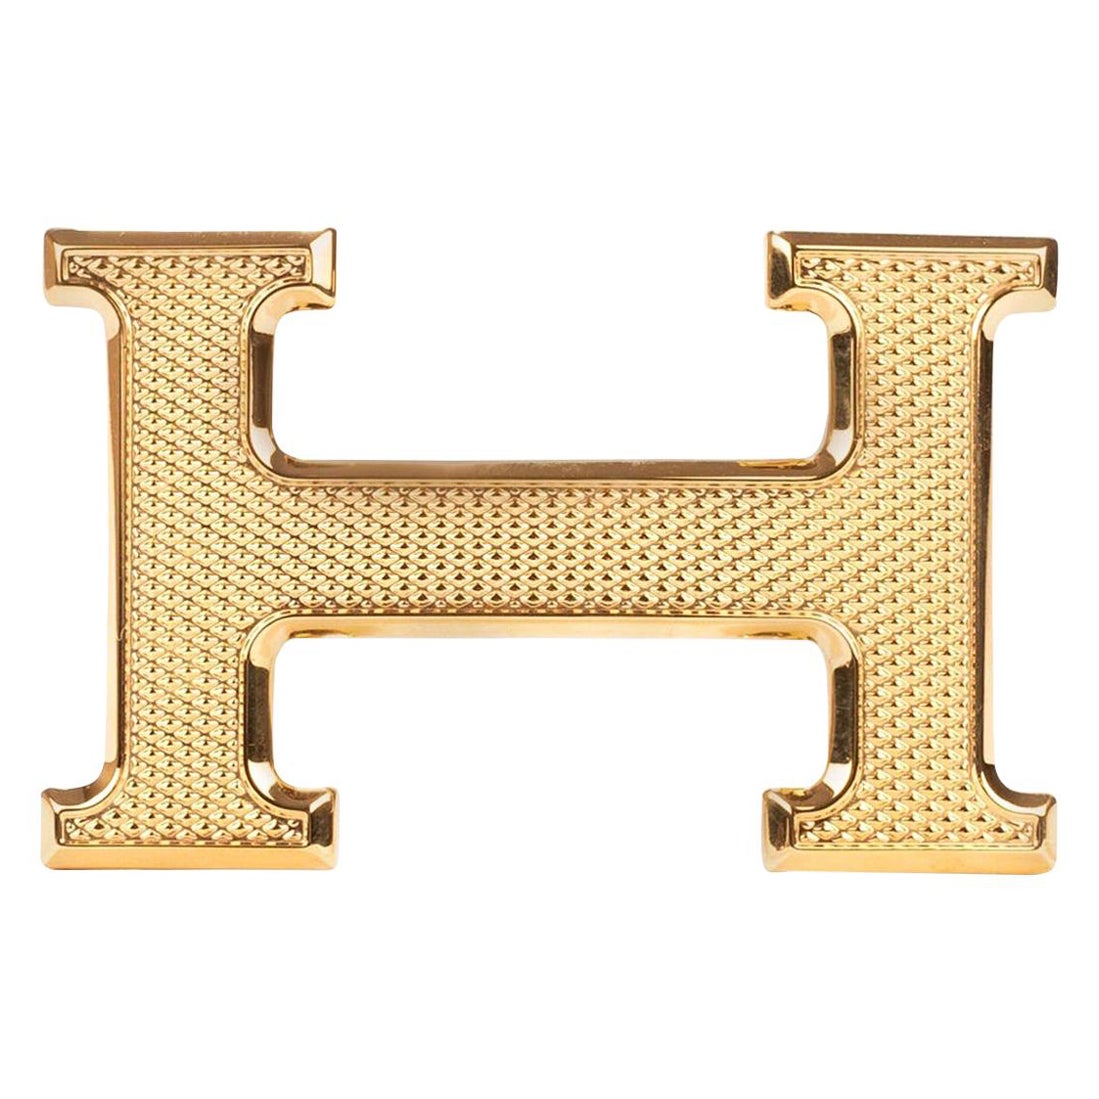 Brand new Hermès "Guillochée" belt buckle  in shiny gold metal  For Sale